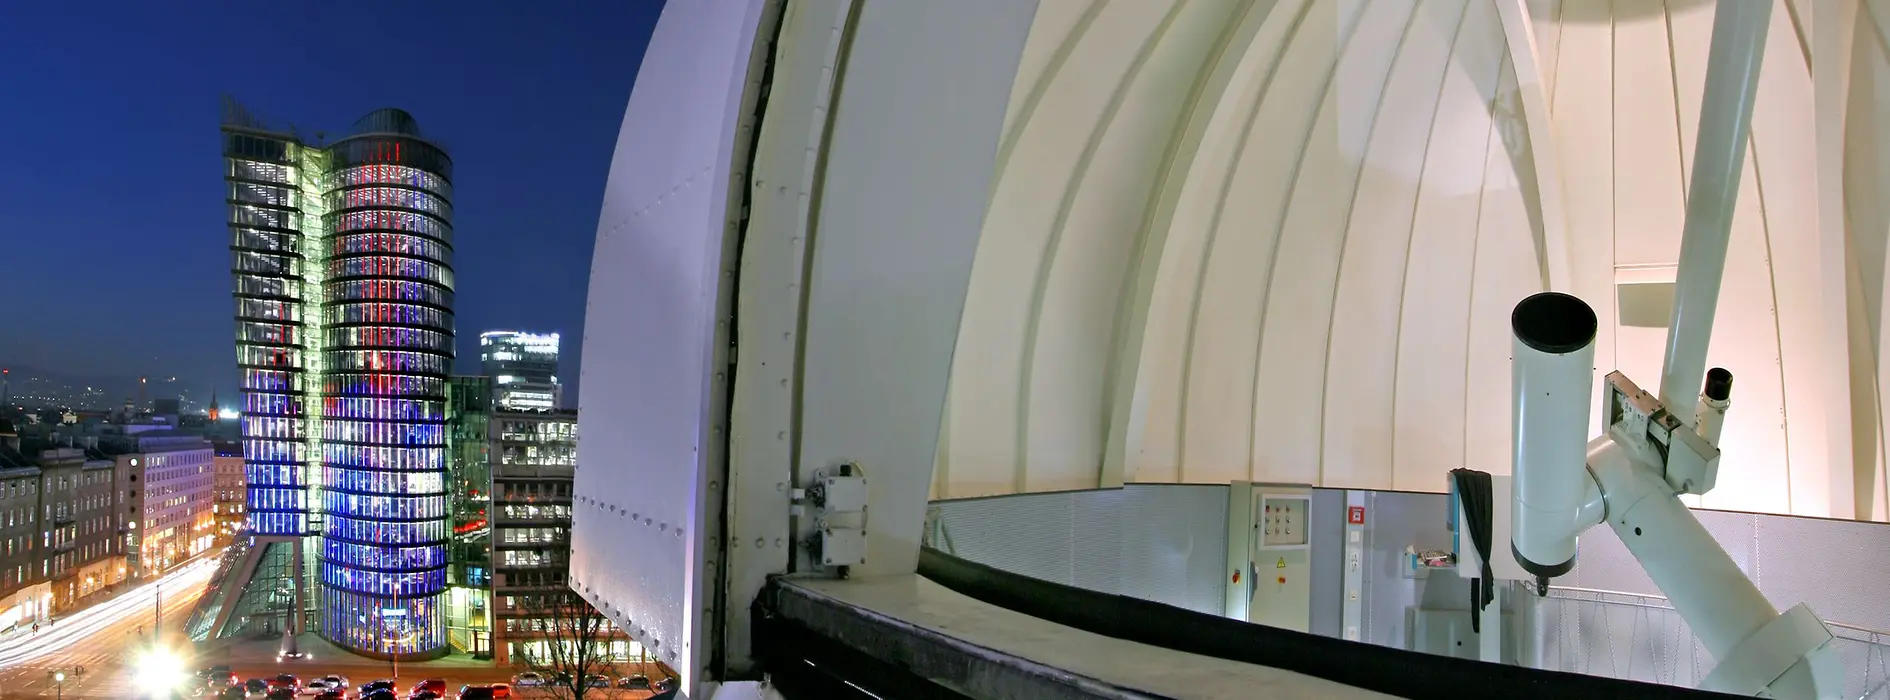 Osservatorio astronomico Urania